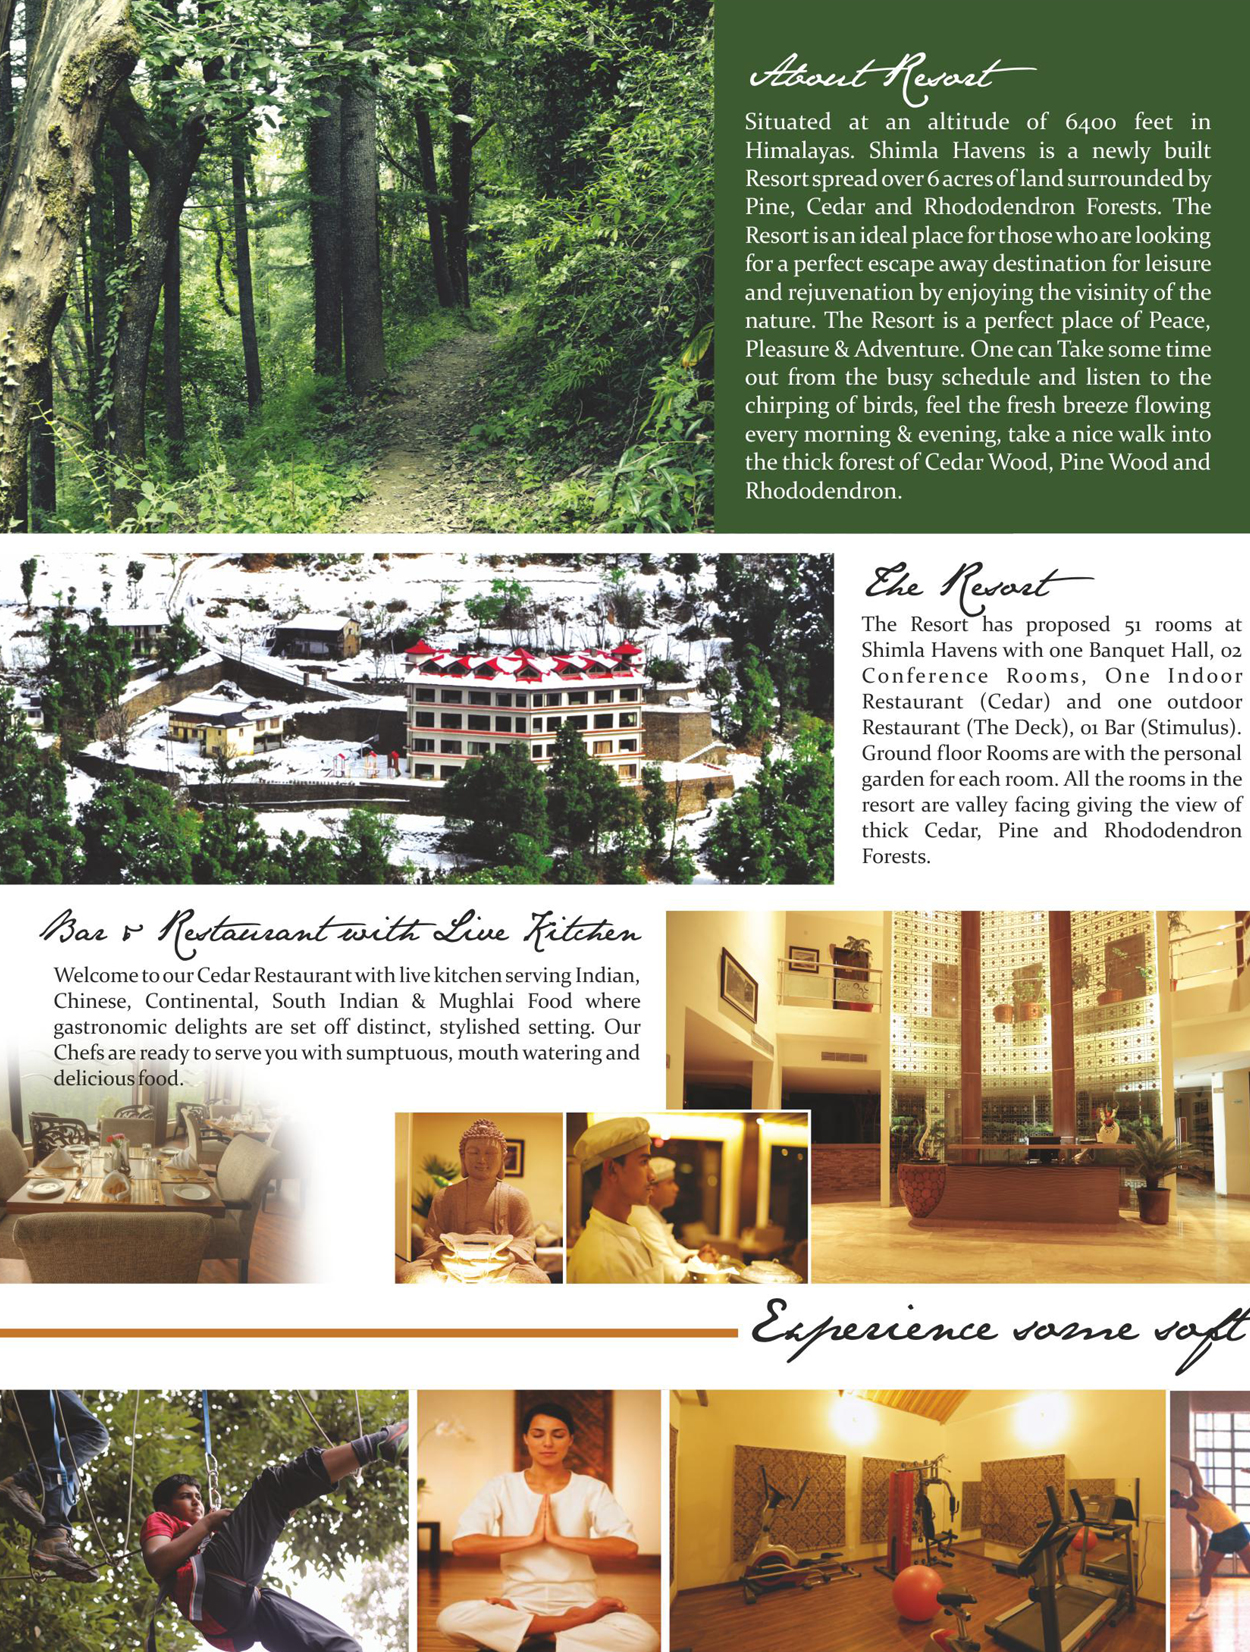 Shimla Havens Resort Over View	